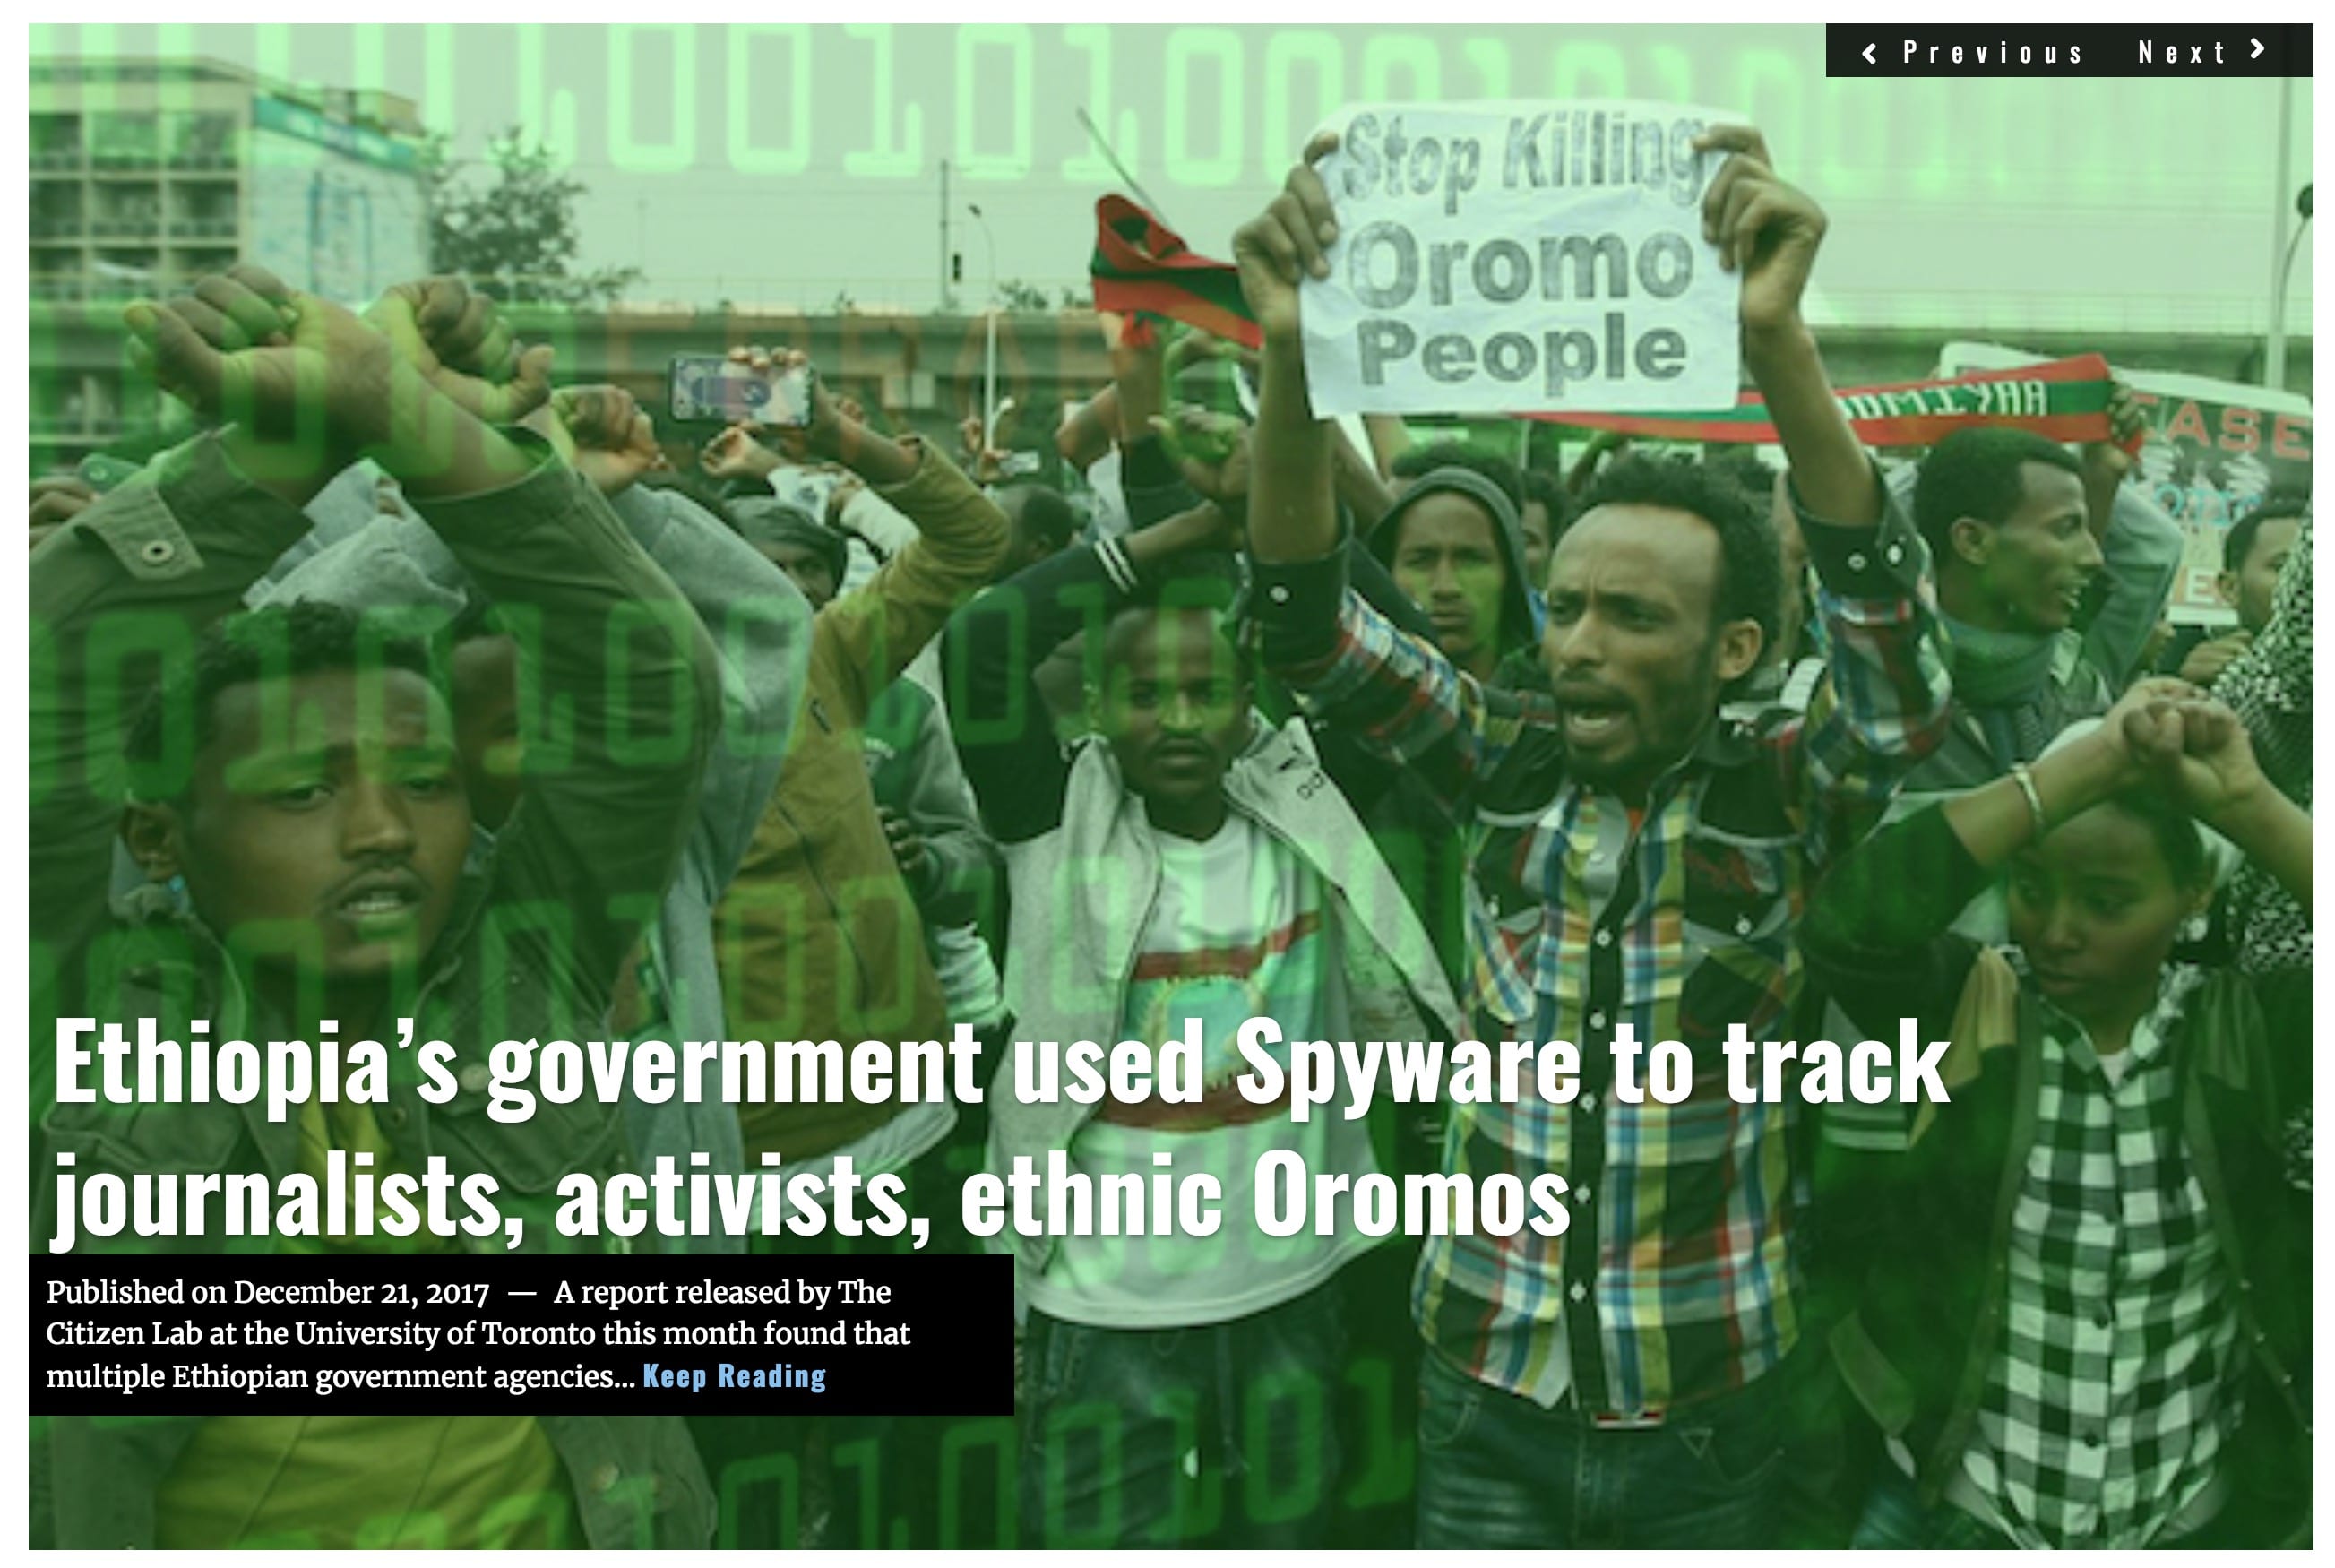 Image Lima Charlie News Headline Ethiopia spyware DEC21